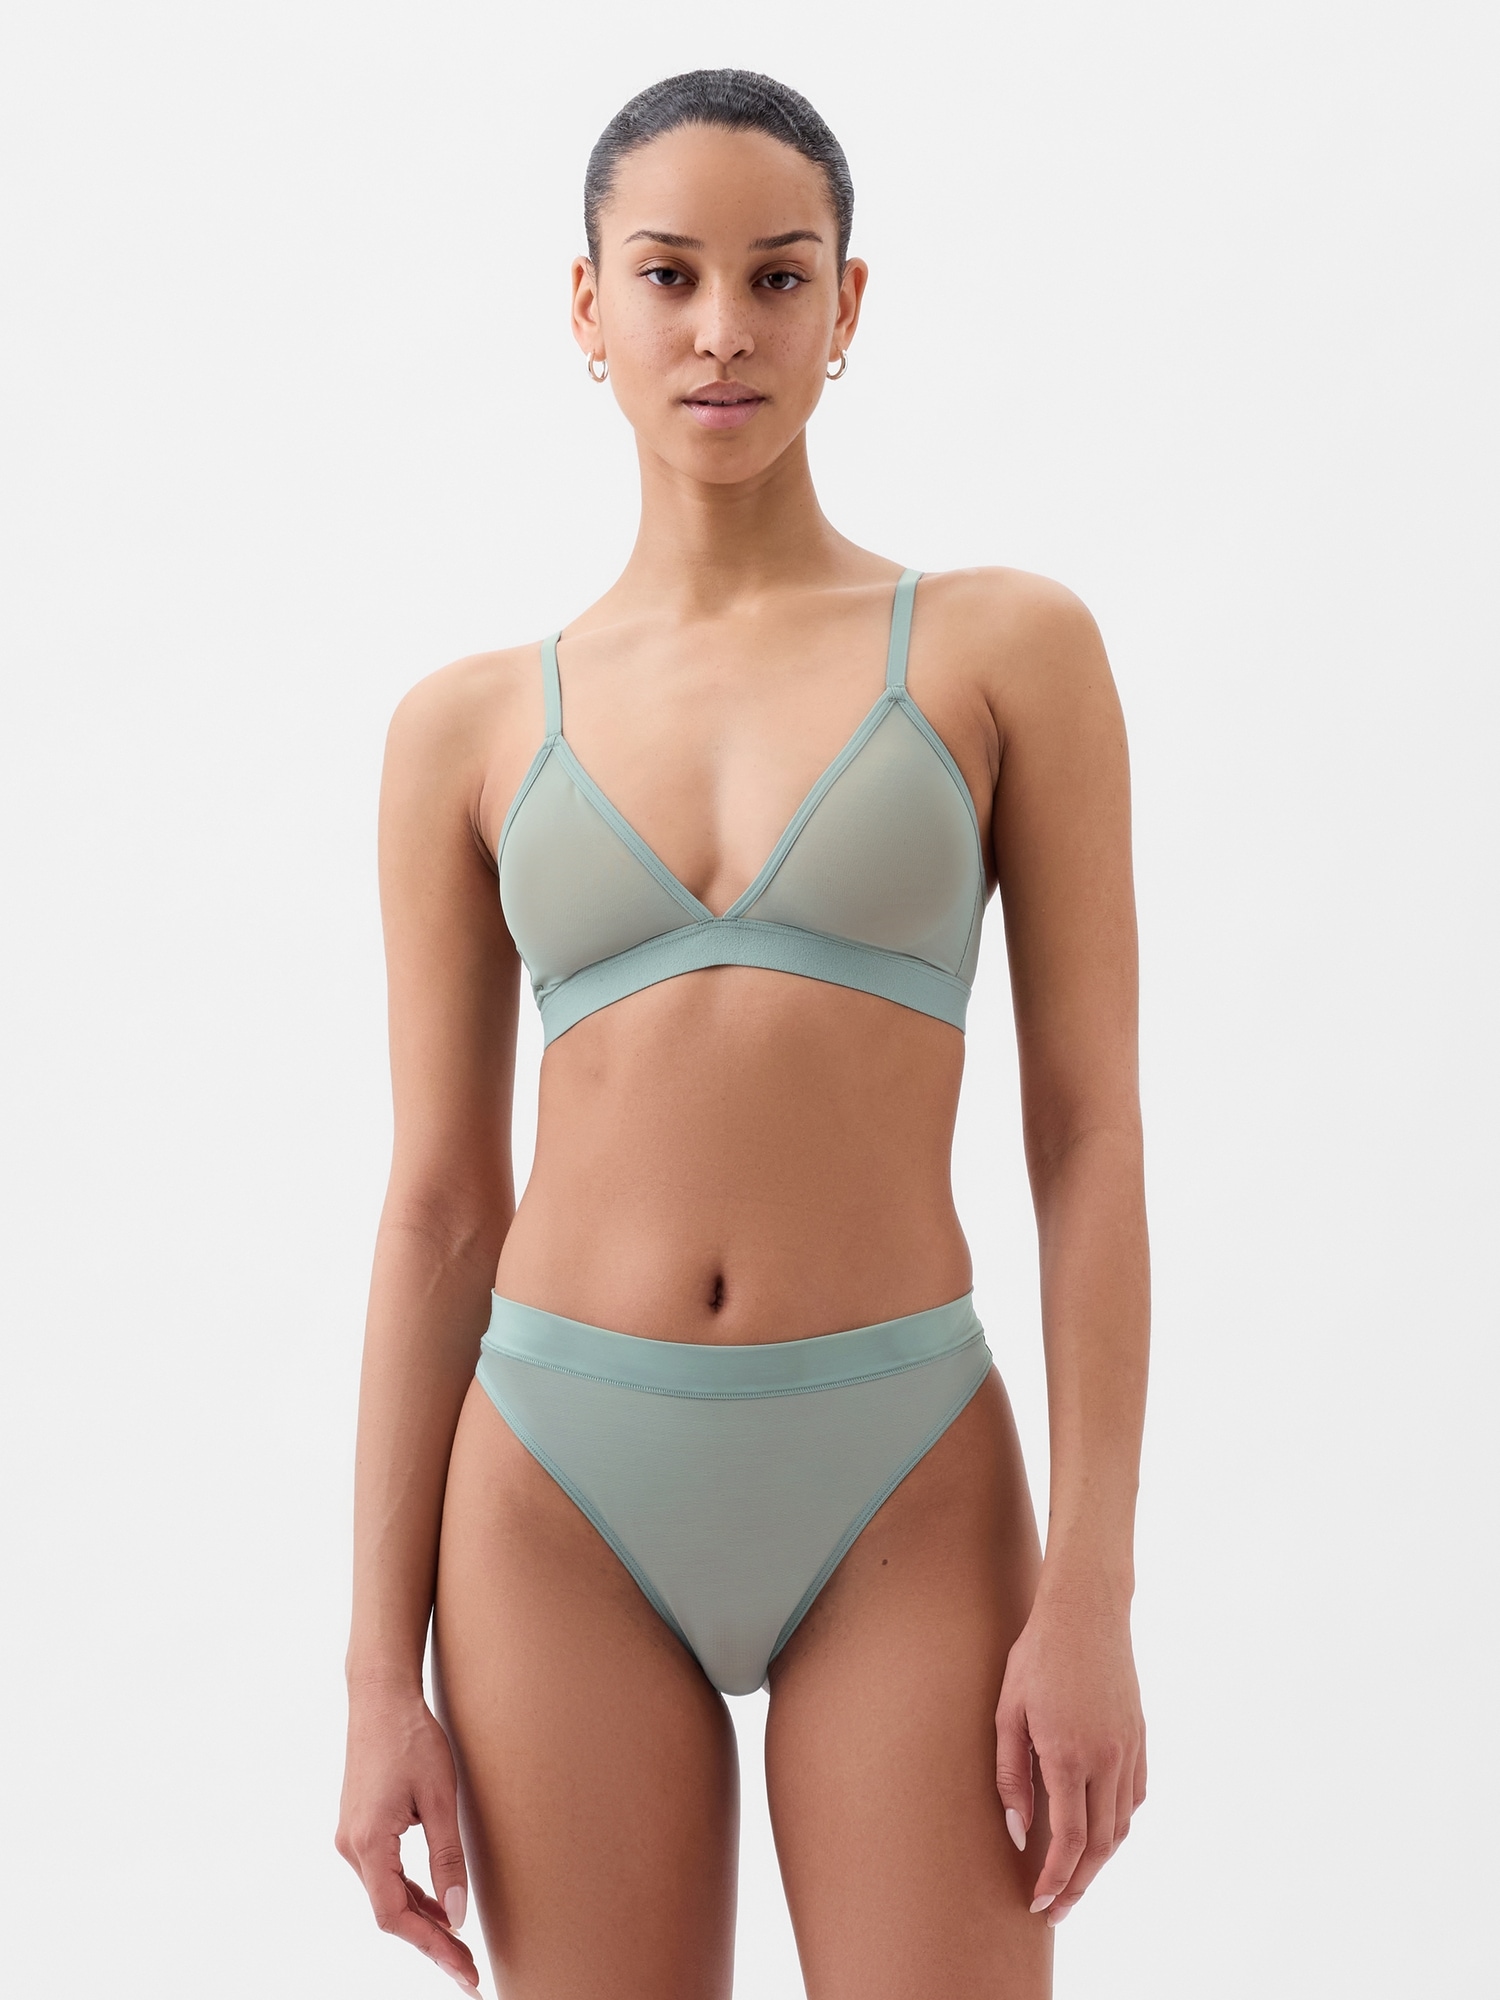 Buy Calvin Klein Underwear Women Sage Green Padded Racer Back Bralette 